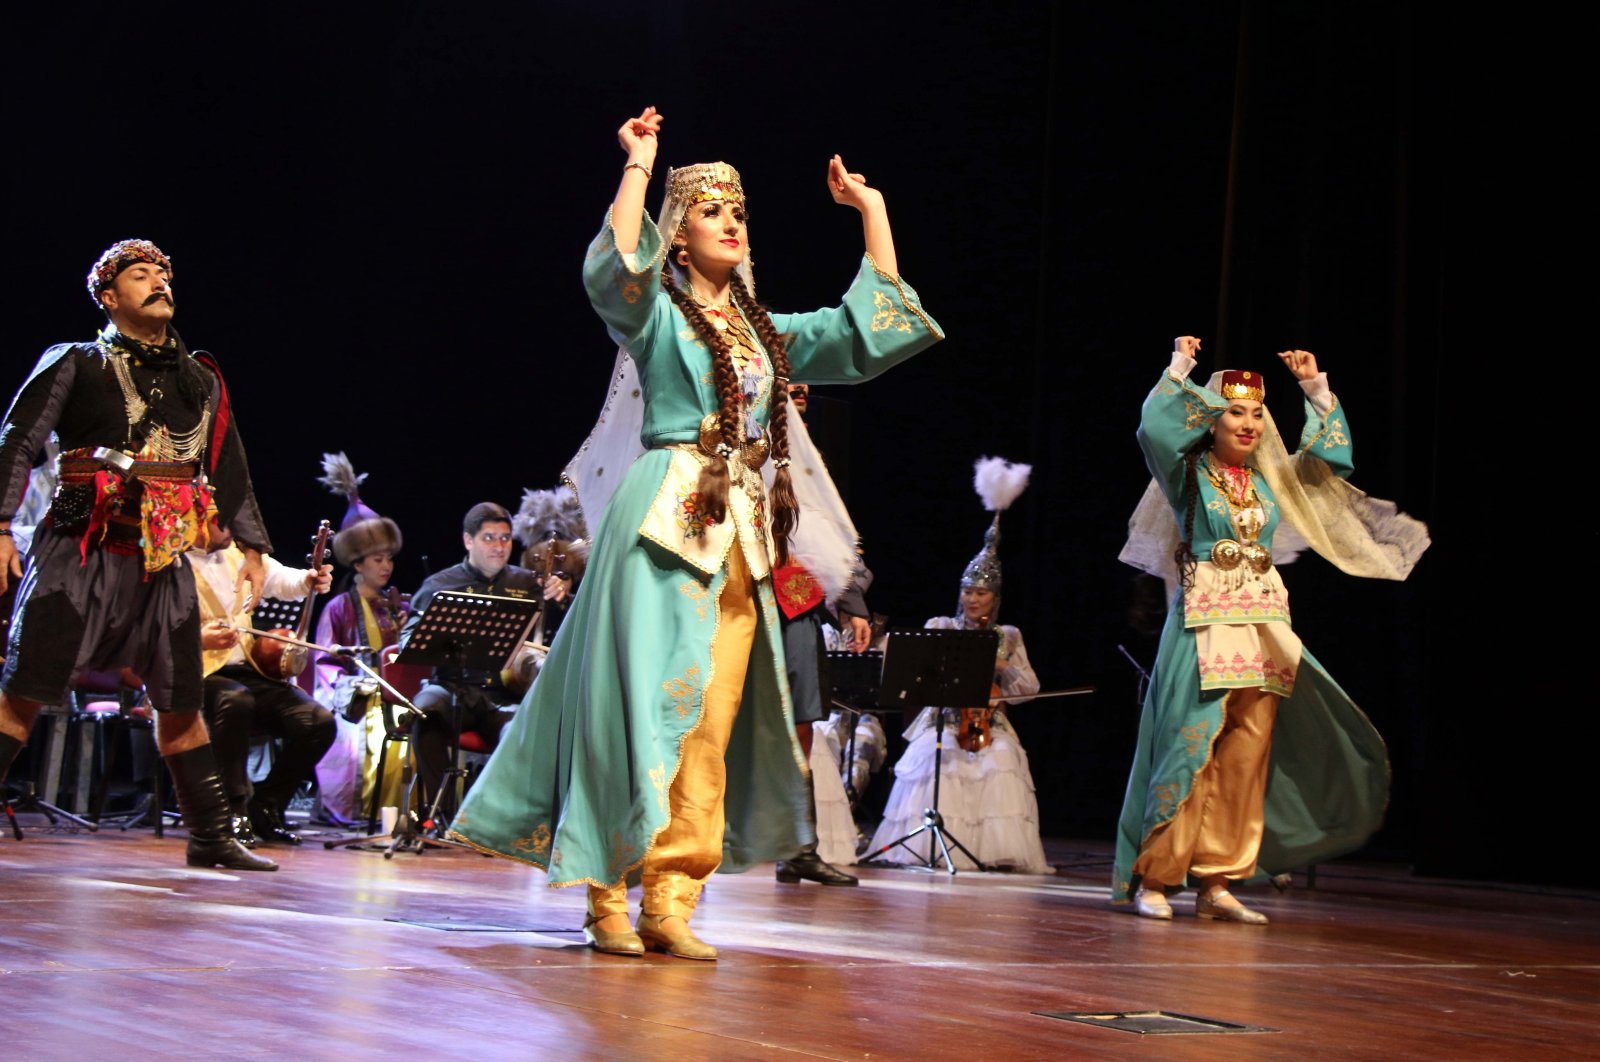 Festival musim semi Nevruz mengangkat Turki setelah 2 tahun pandemi